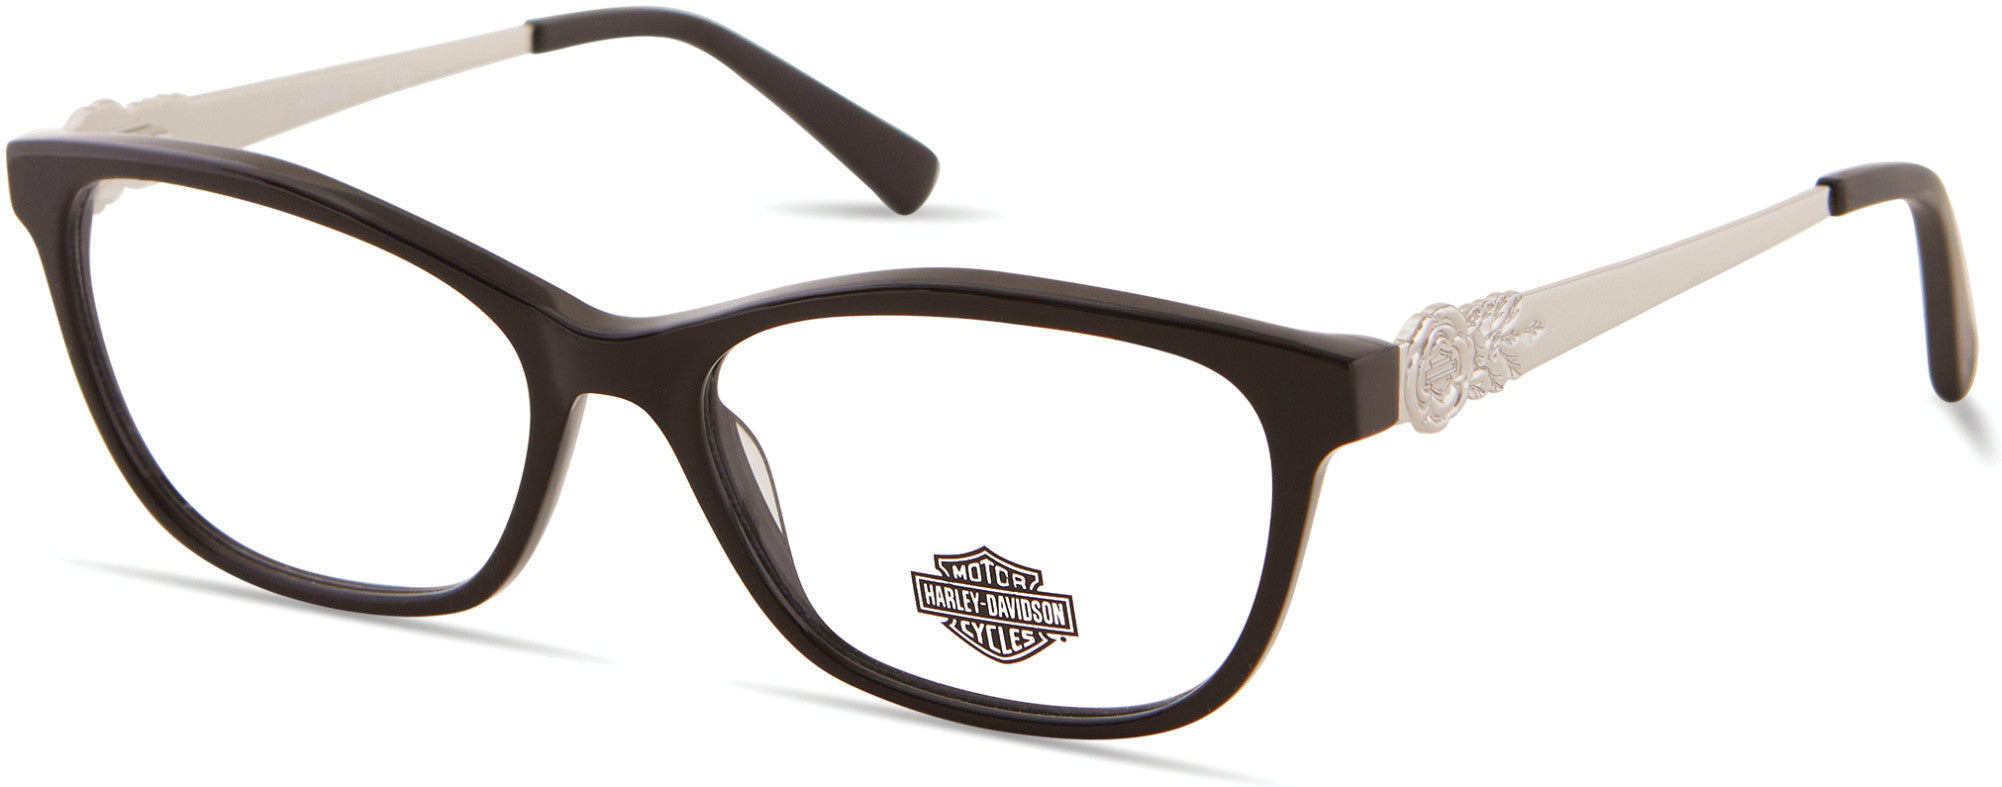 Harley-Davidson HD0555 Rectangular Eyeglasses 001-001 - Shiny Black